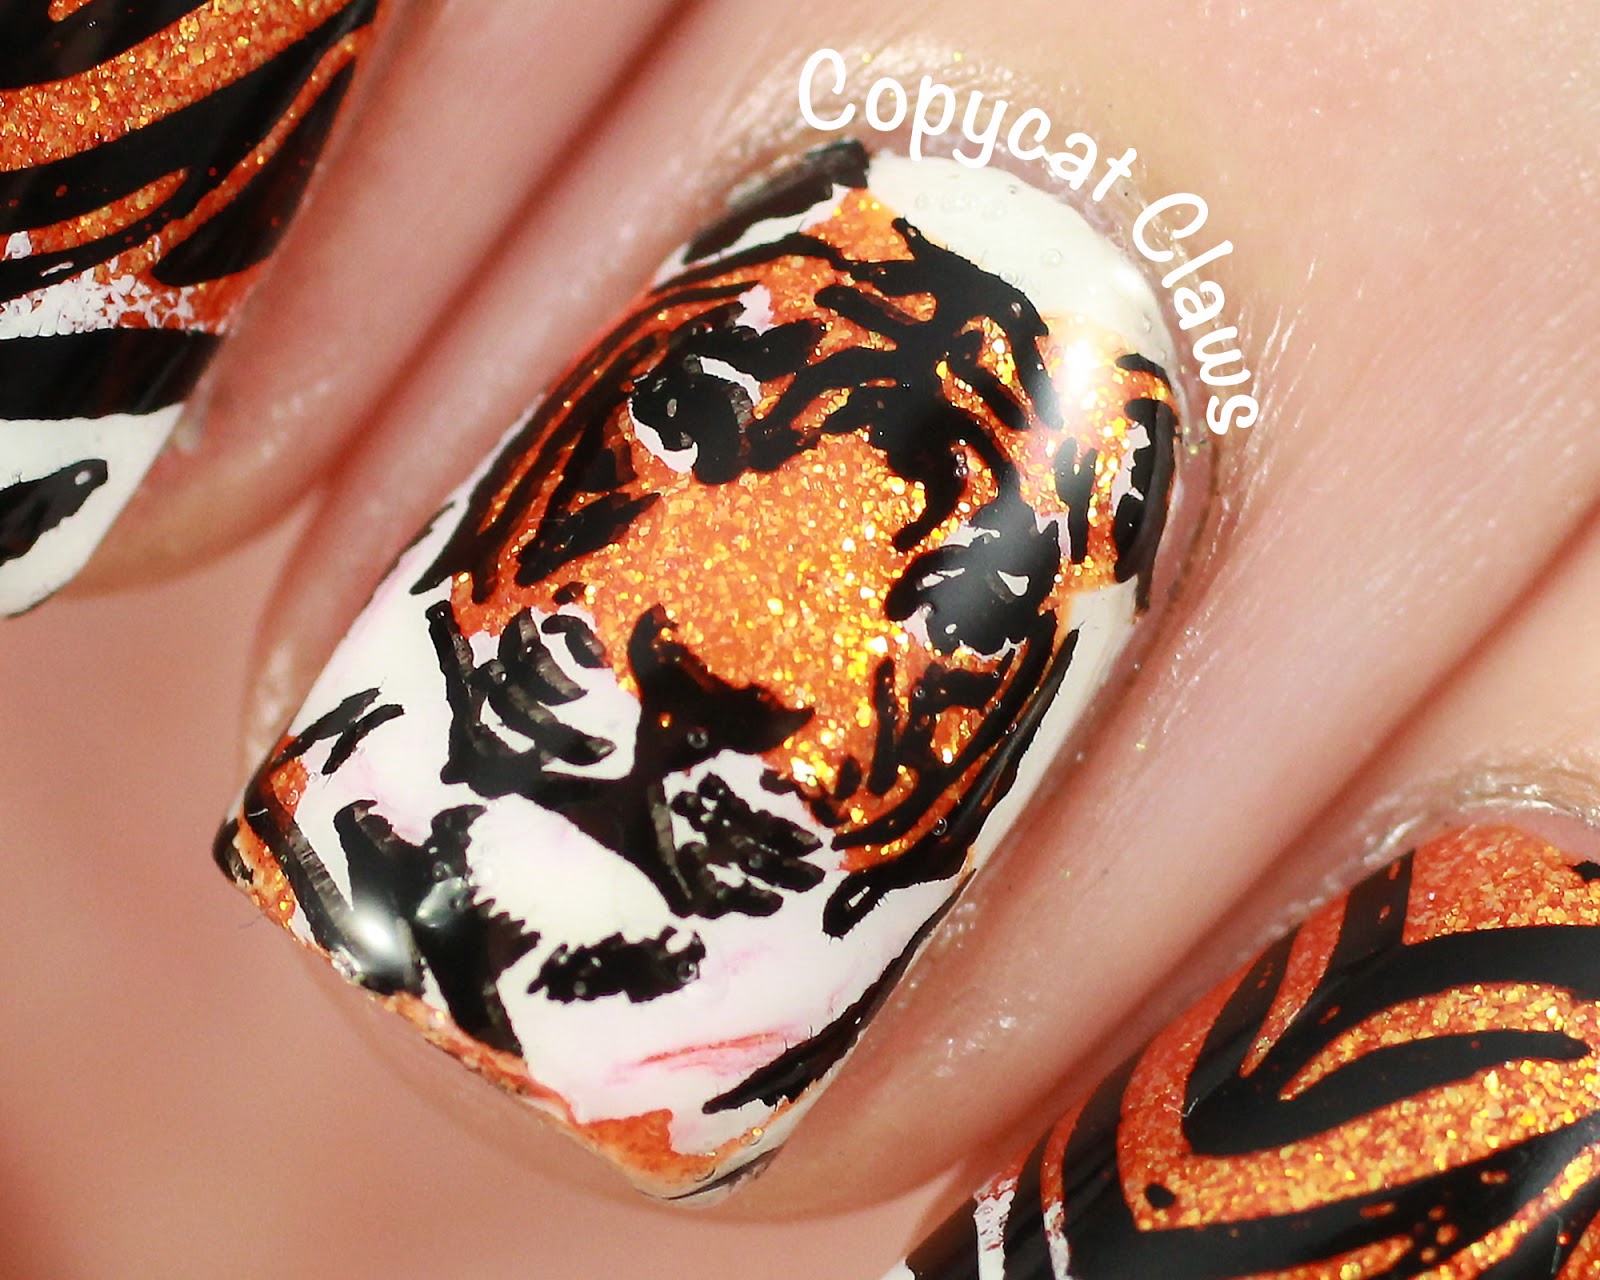 2. Tiger Print Nail Art - wide 3